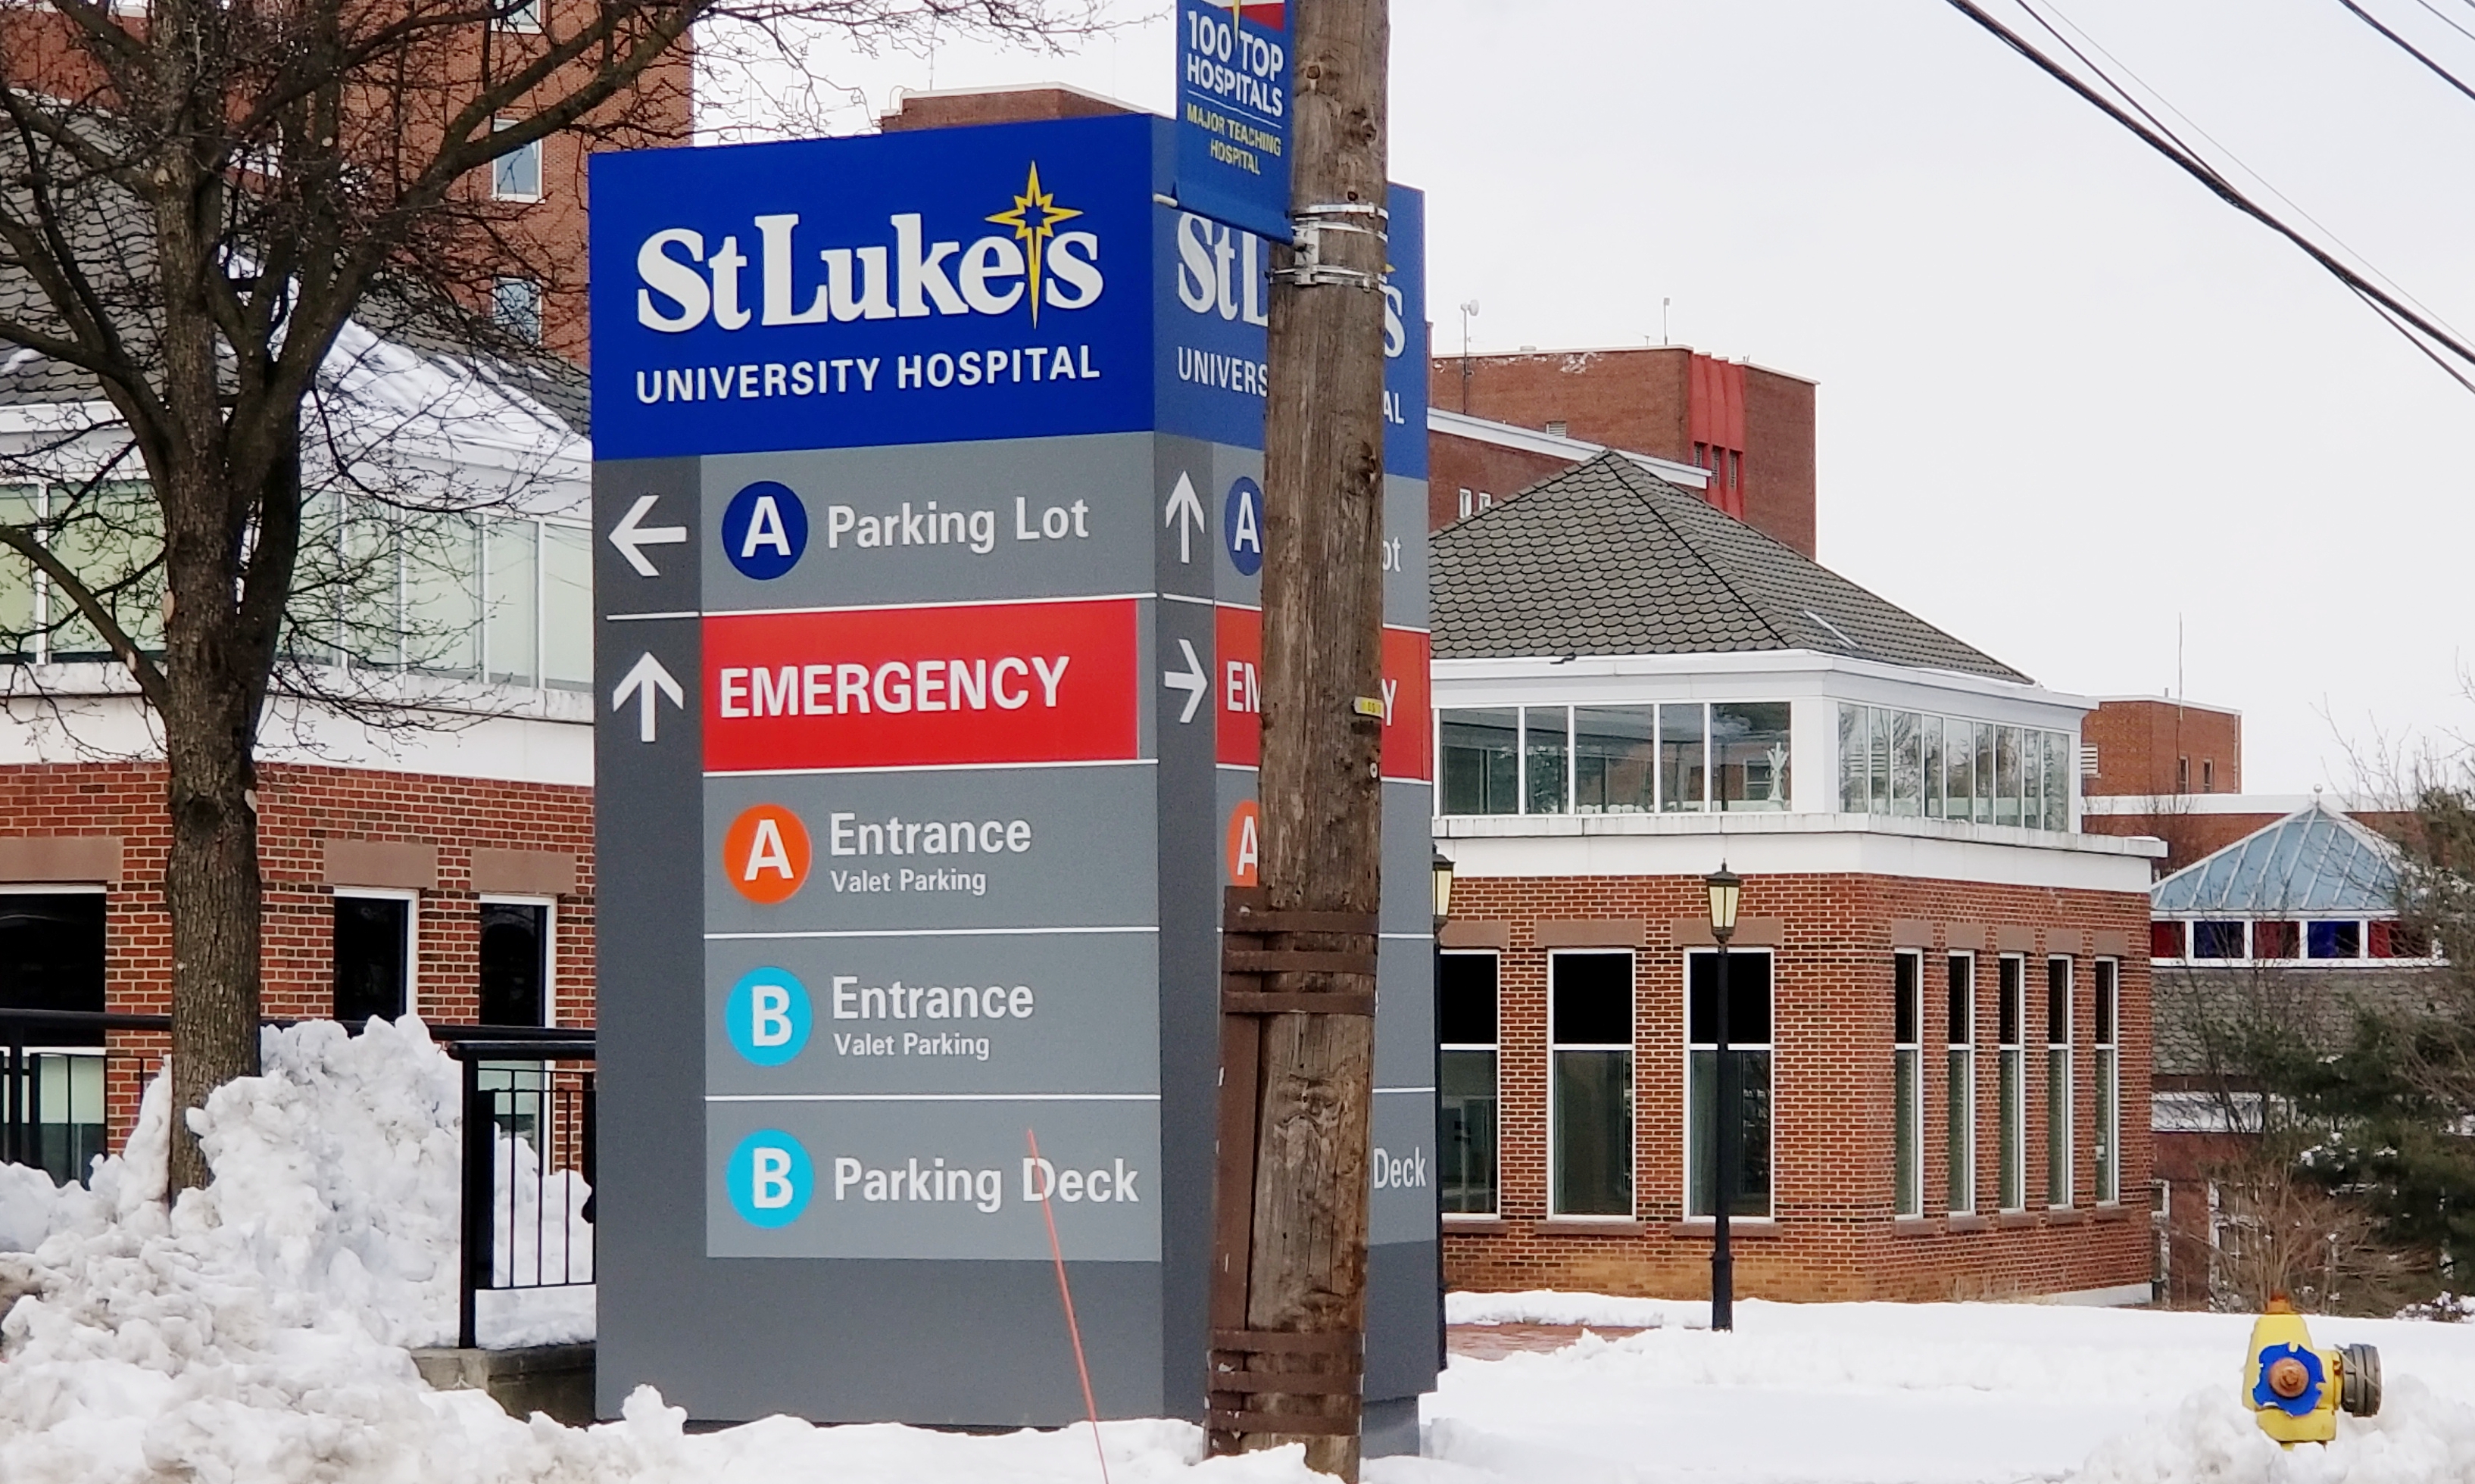 St. Luke’s Achieves Multiple 100TopHospital Designations